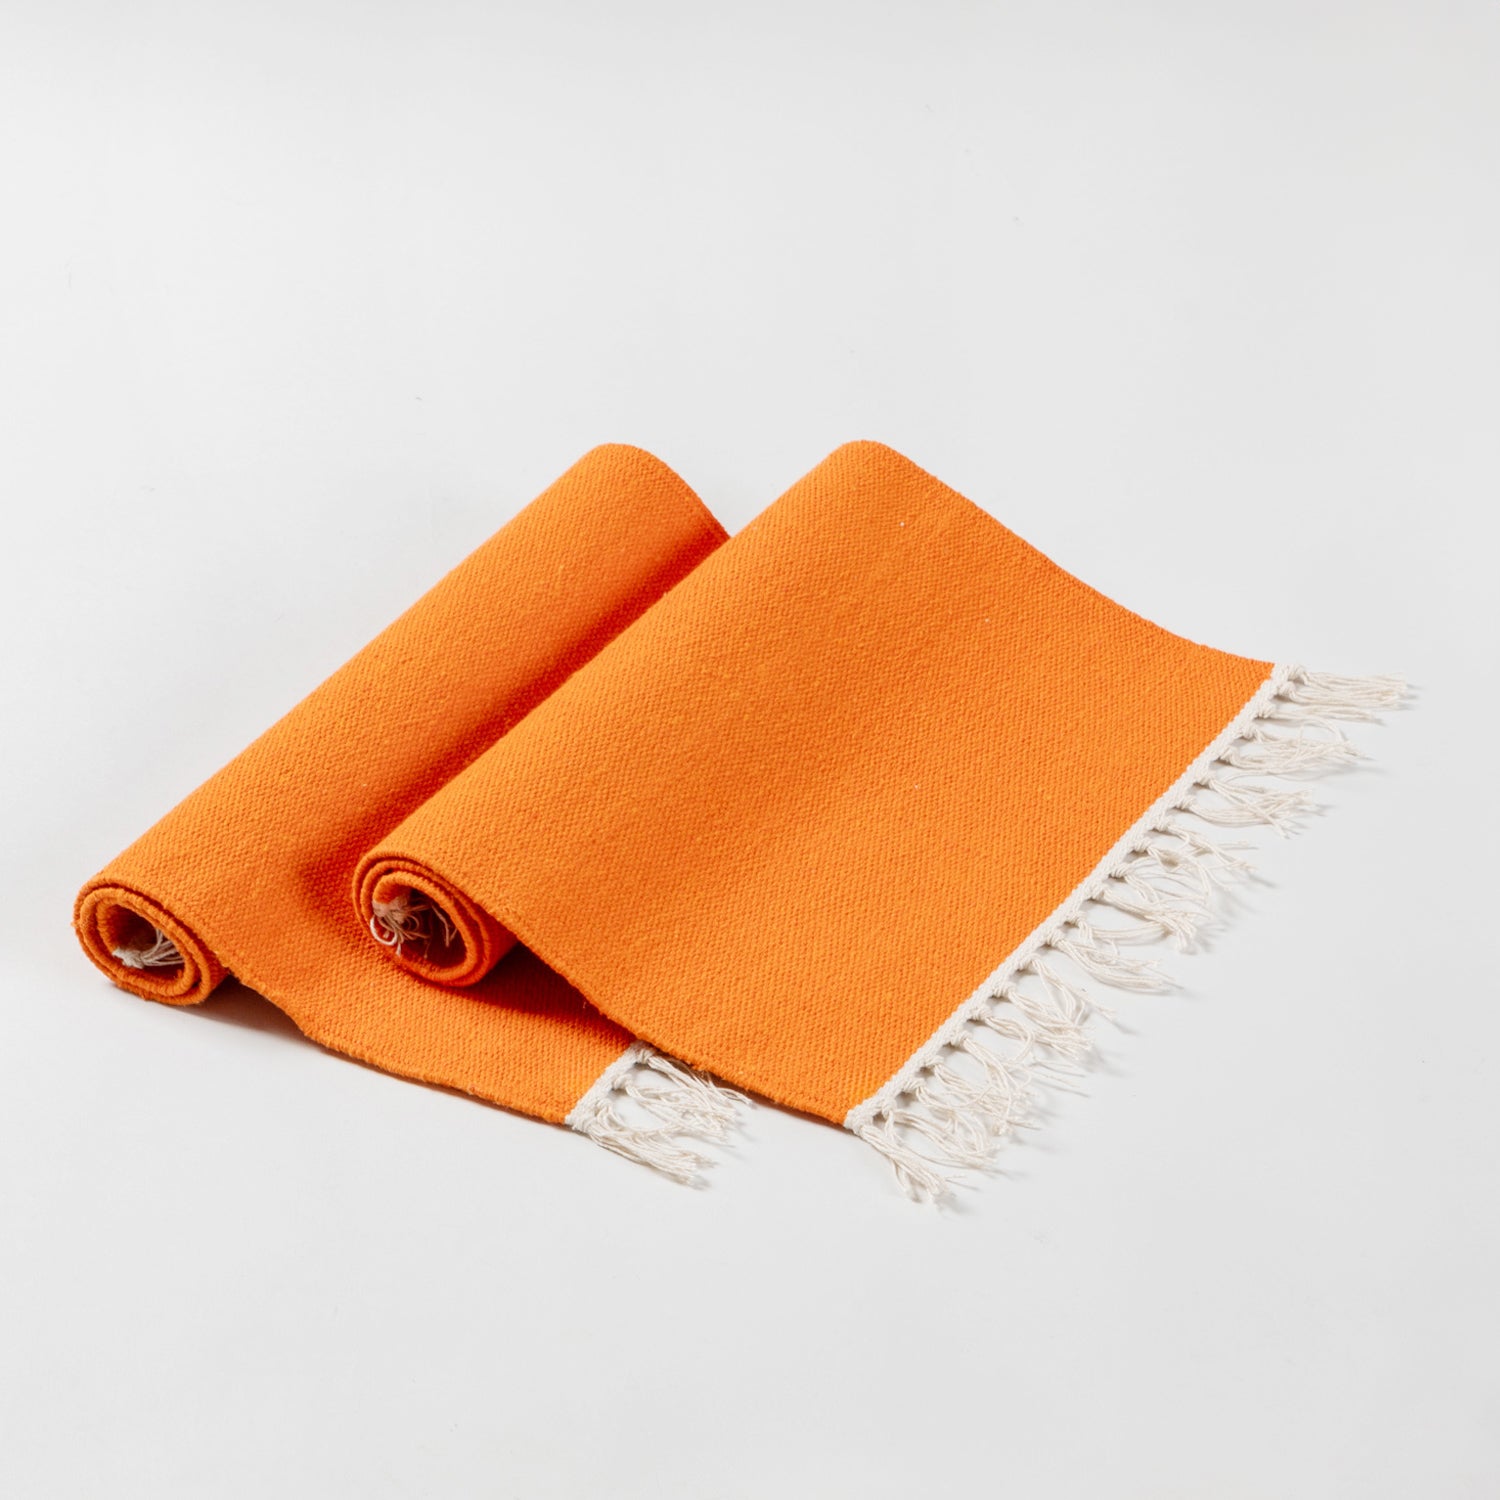 Handwoven Cotton Table Mats Set of 2 Orange - 13x18